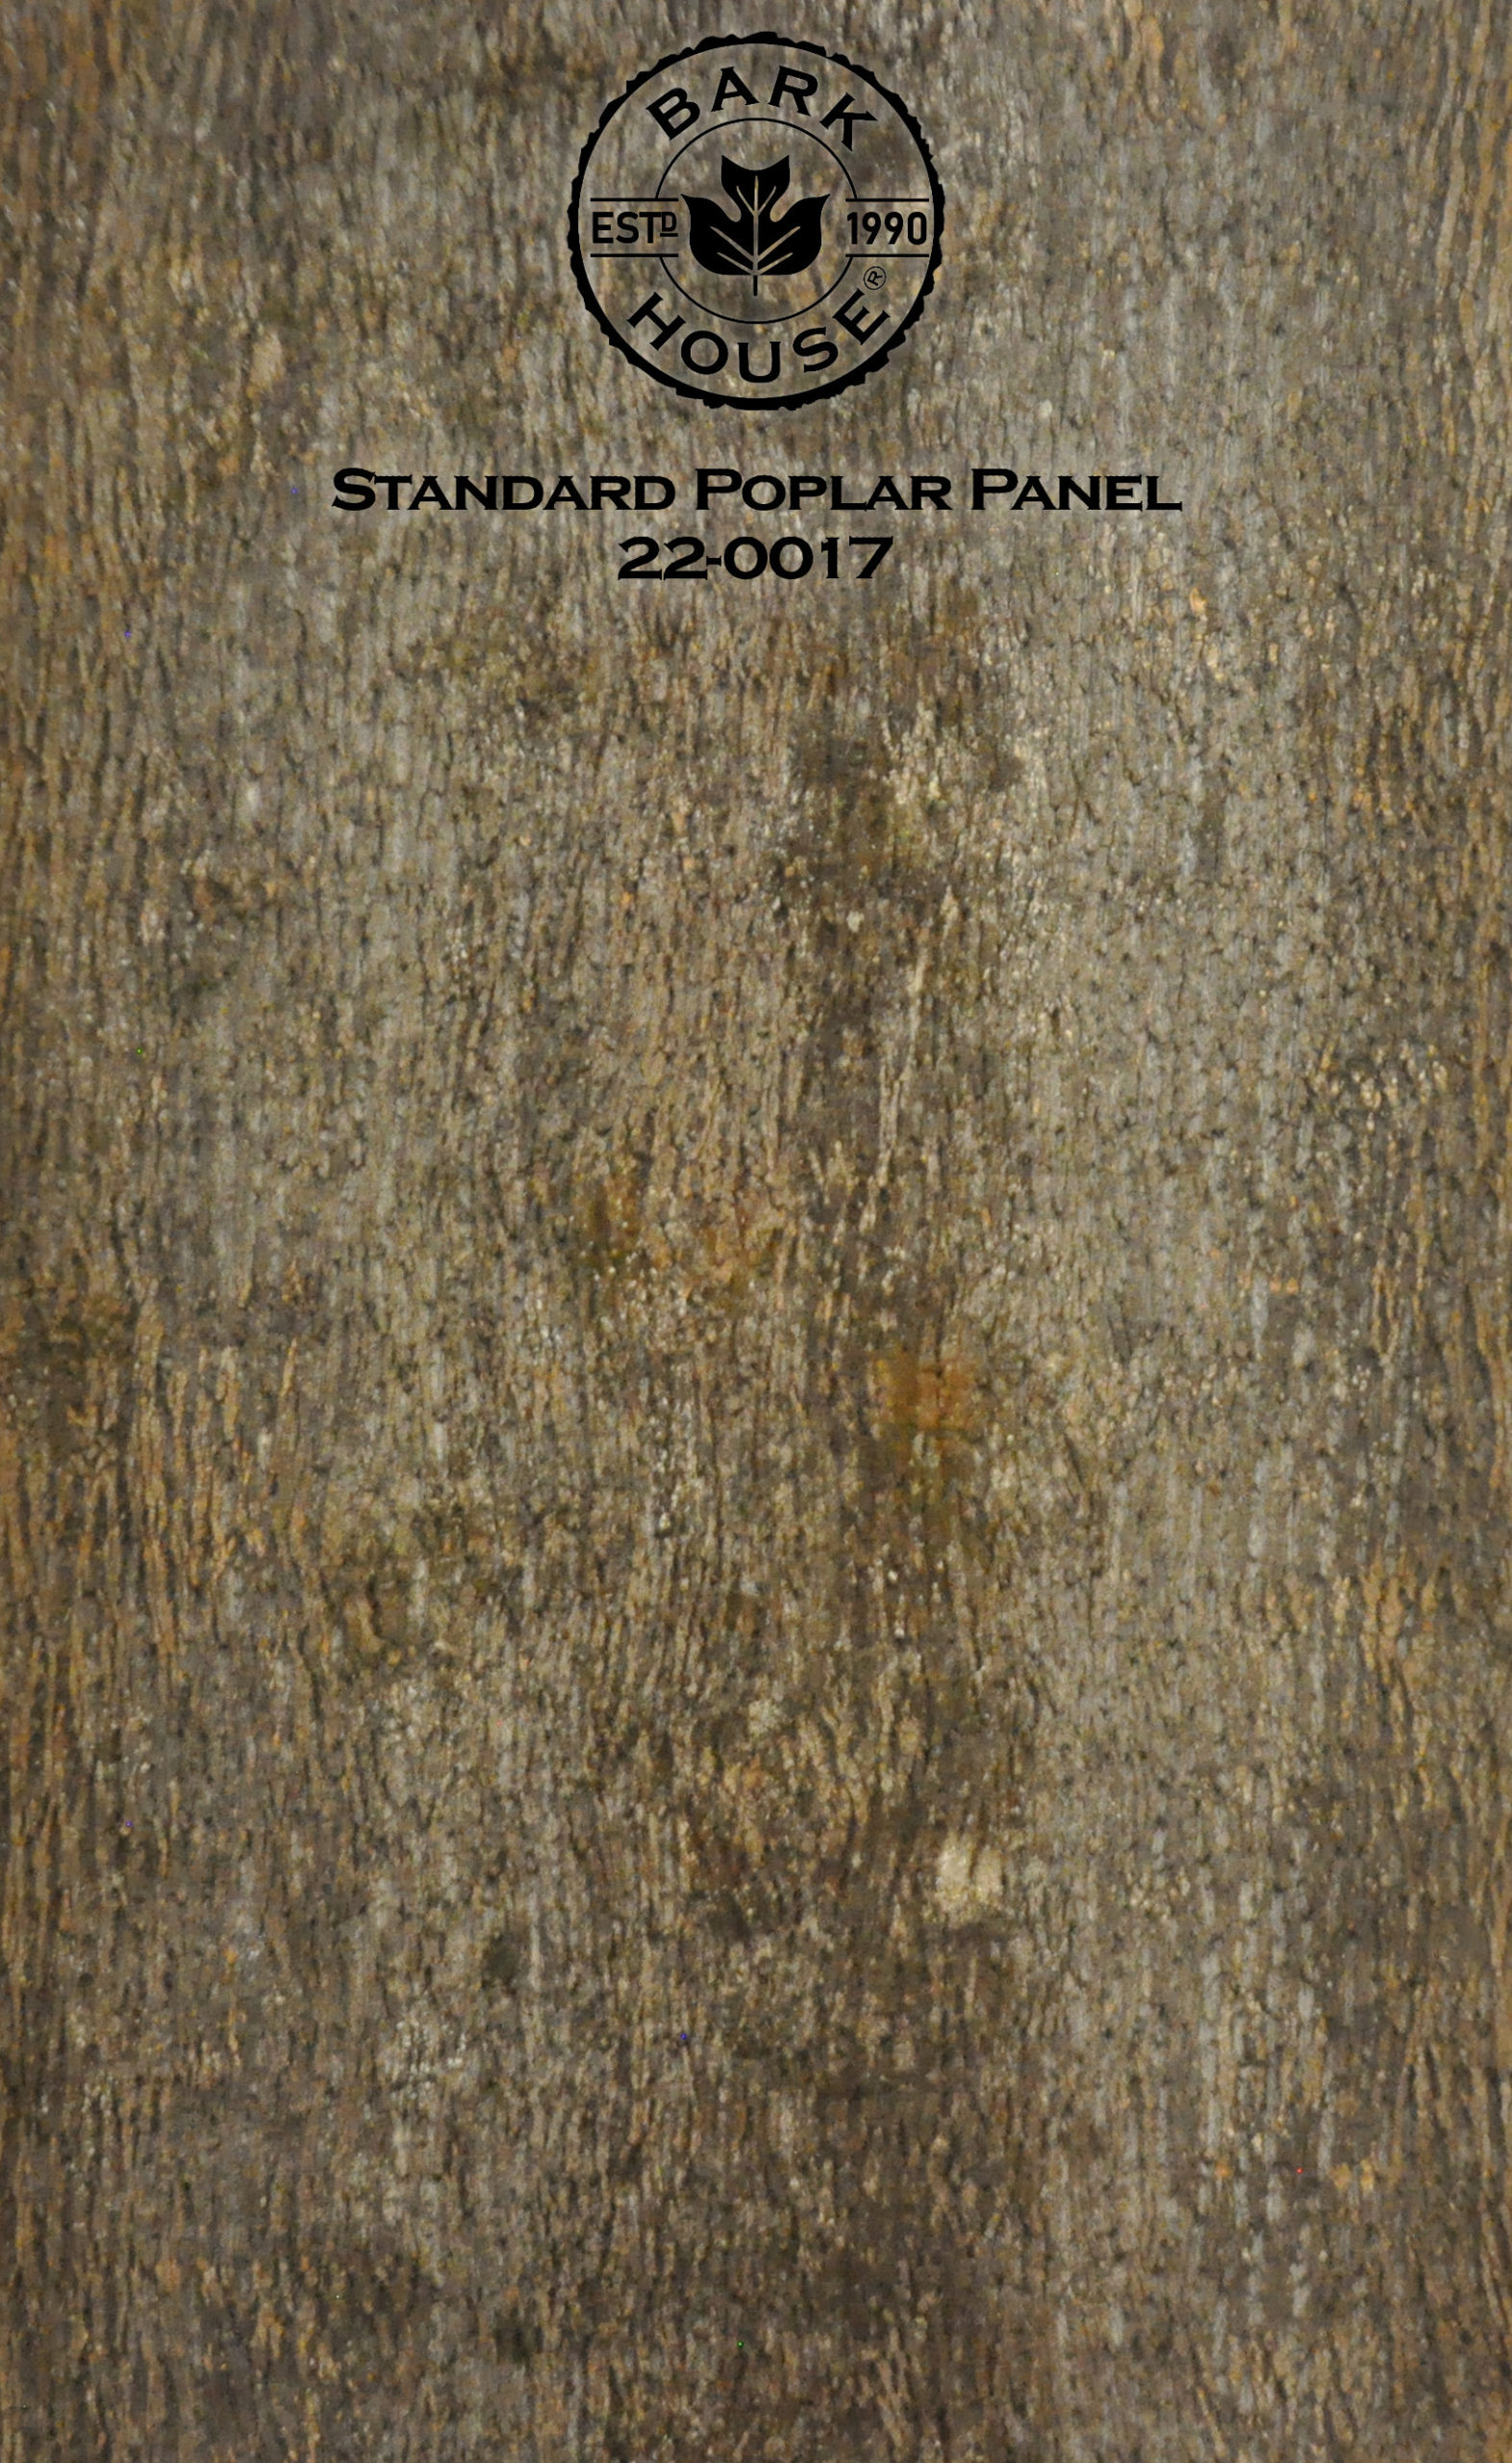 Bark House poplar bark panel SKU POPP-STD-22-0017